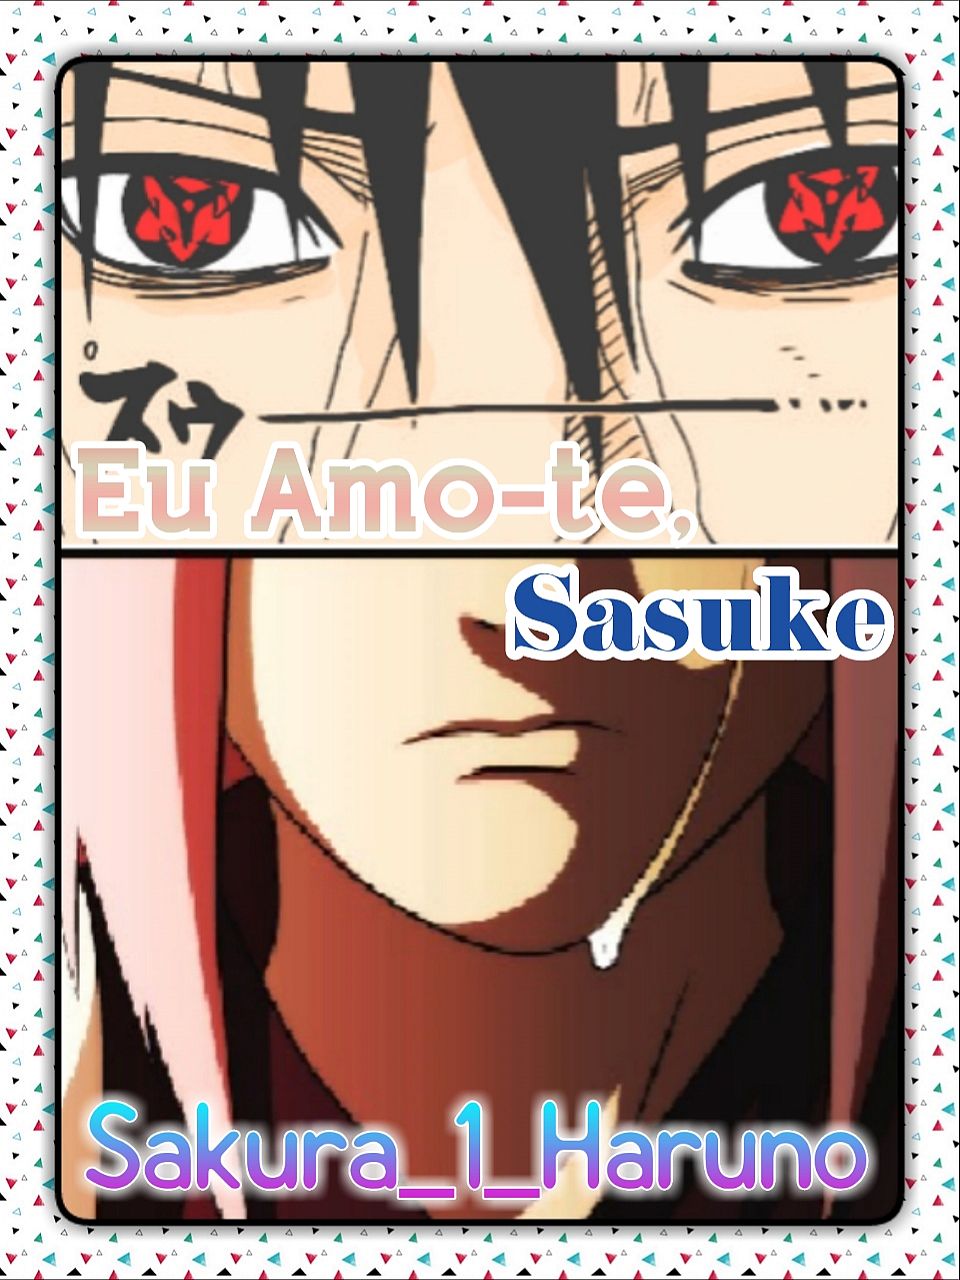 Eu Amo-te, Sasuke